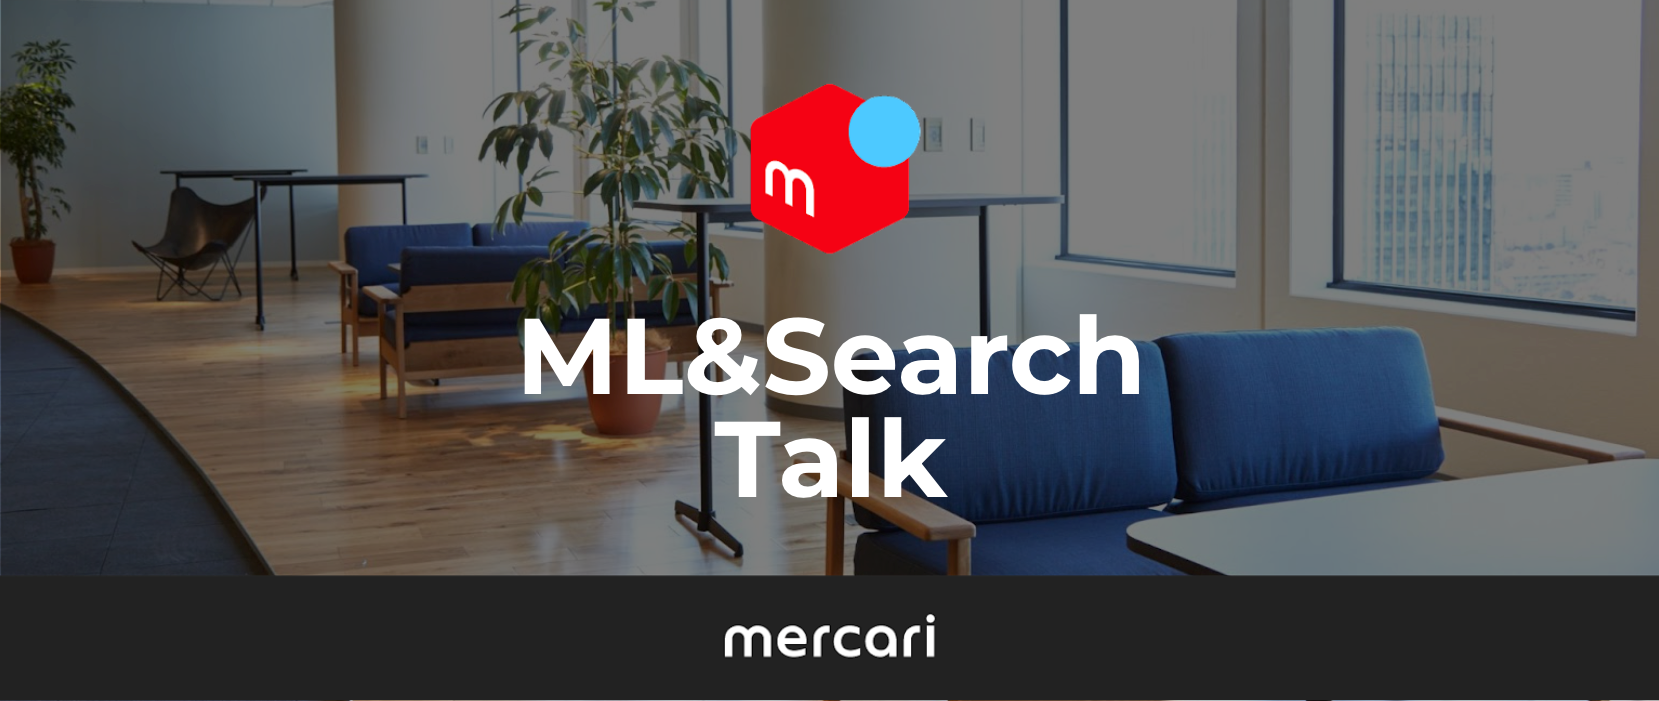 Mercari ML&#038;Search Talk #1 ~Personalization~ を開催しました #mercari_ai